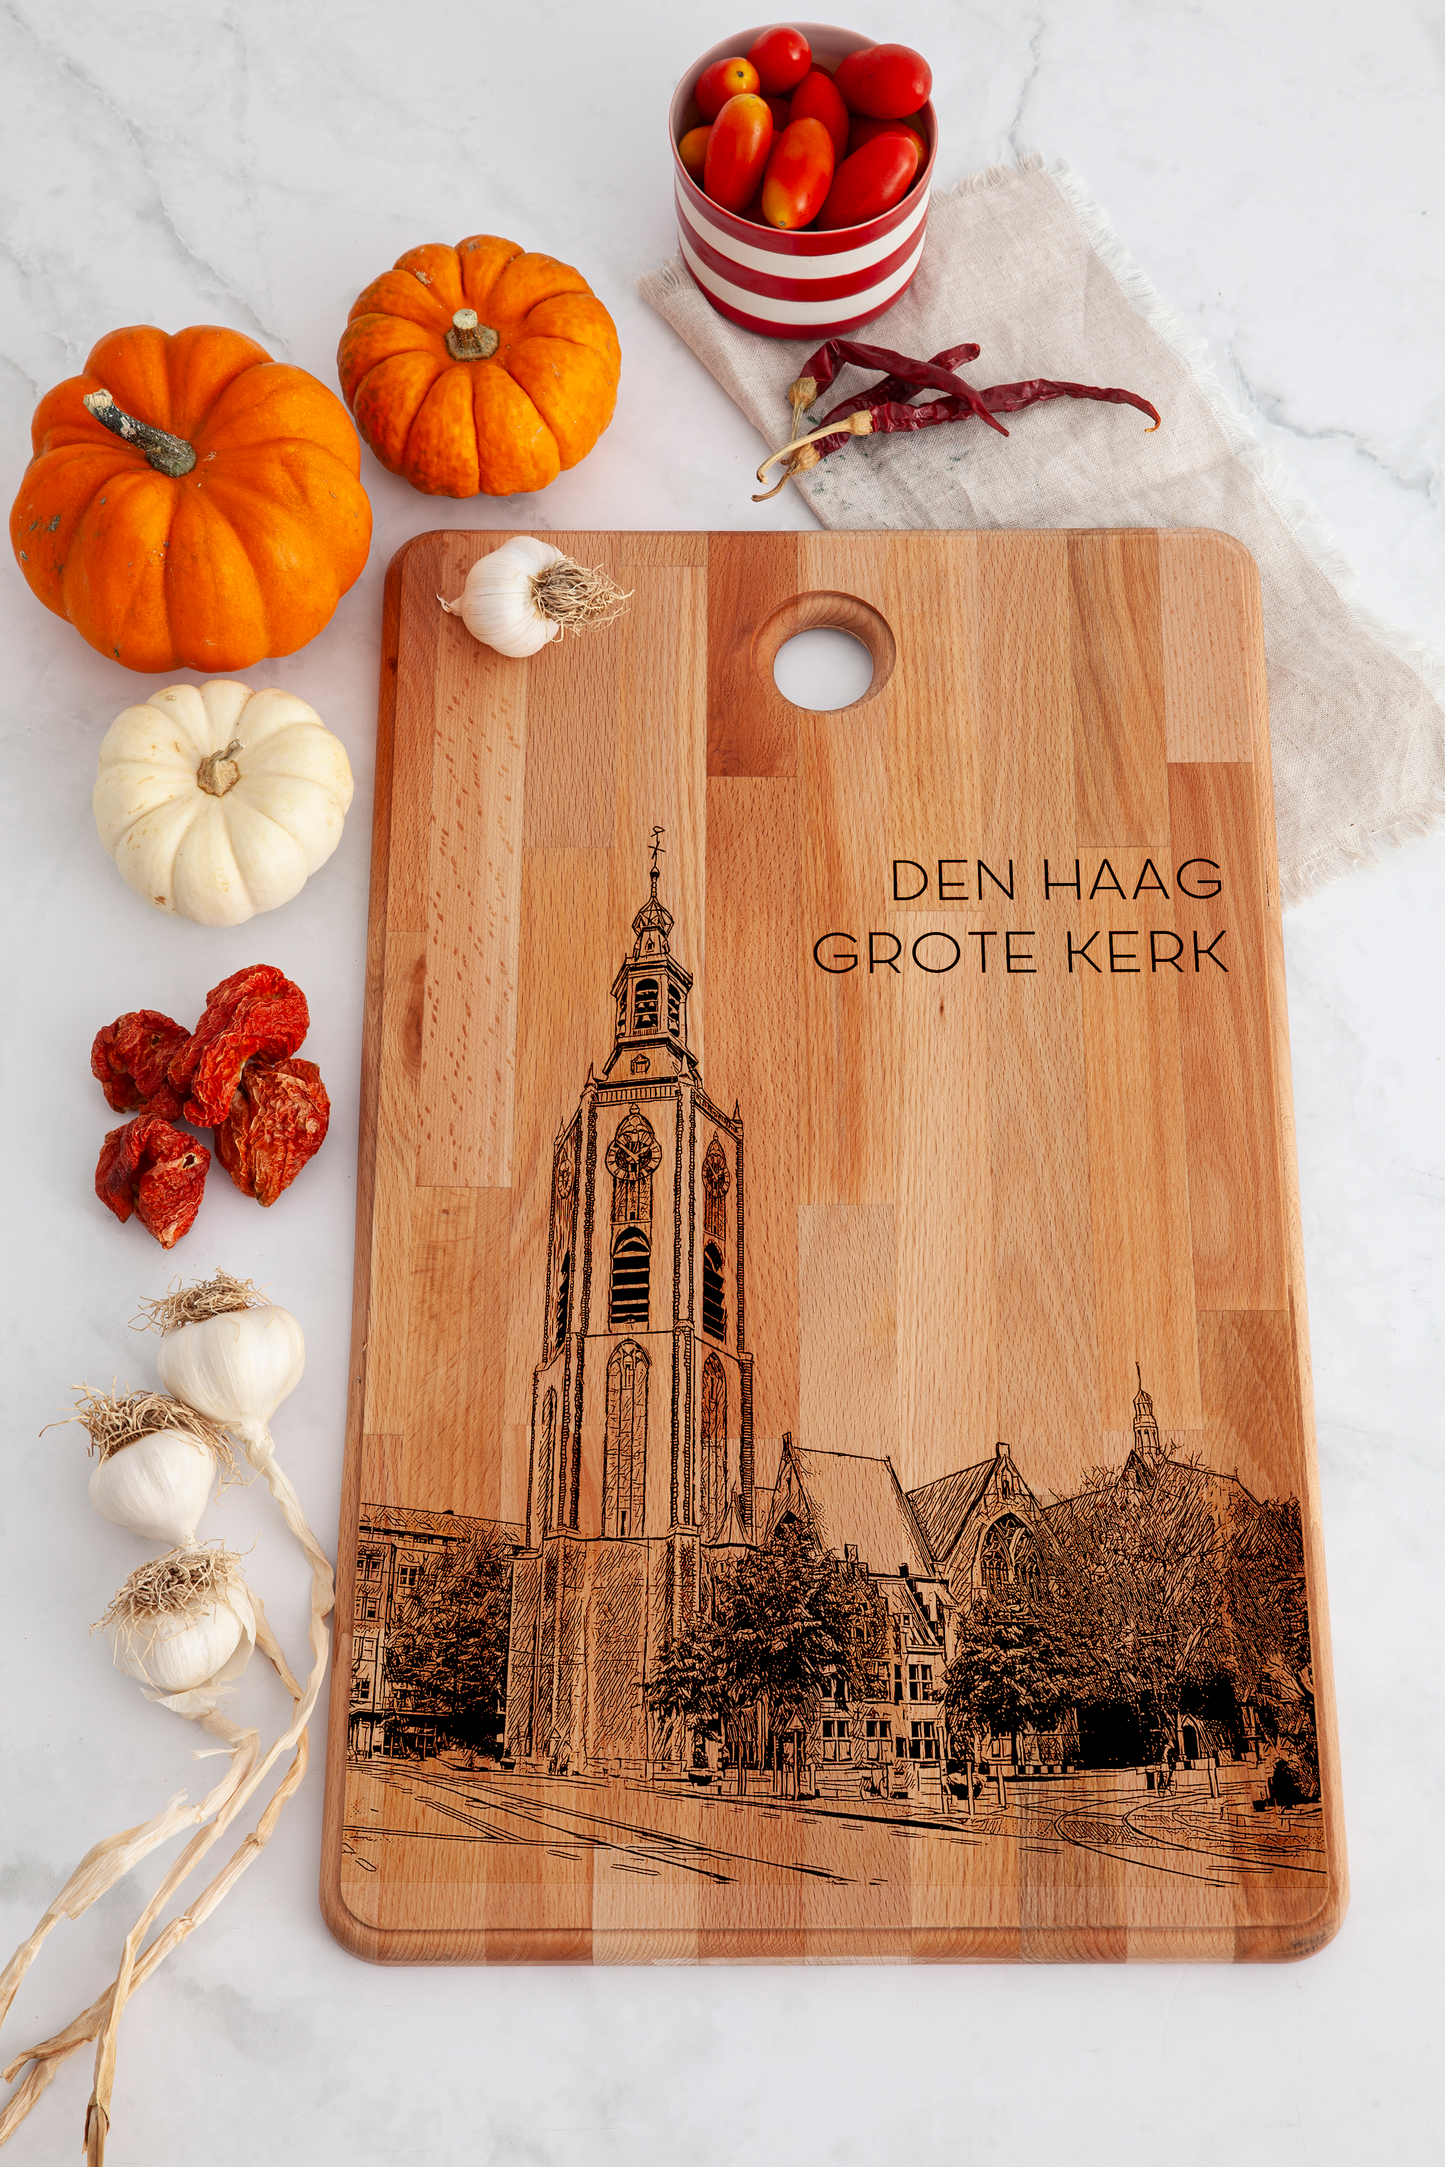 Den Haag, Grote Kerk, cutting board, on countertop